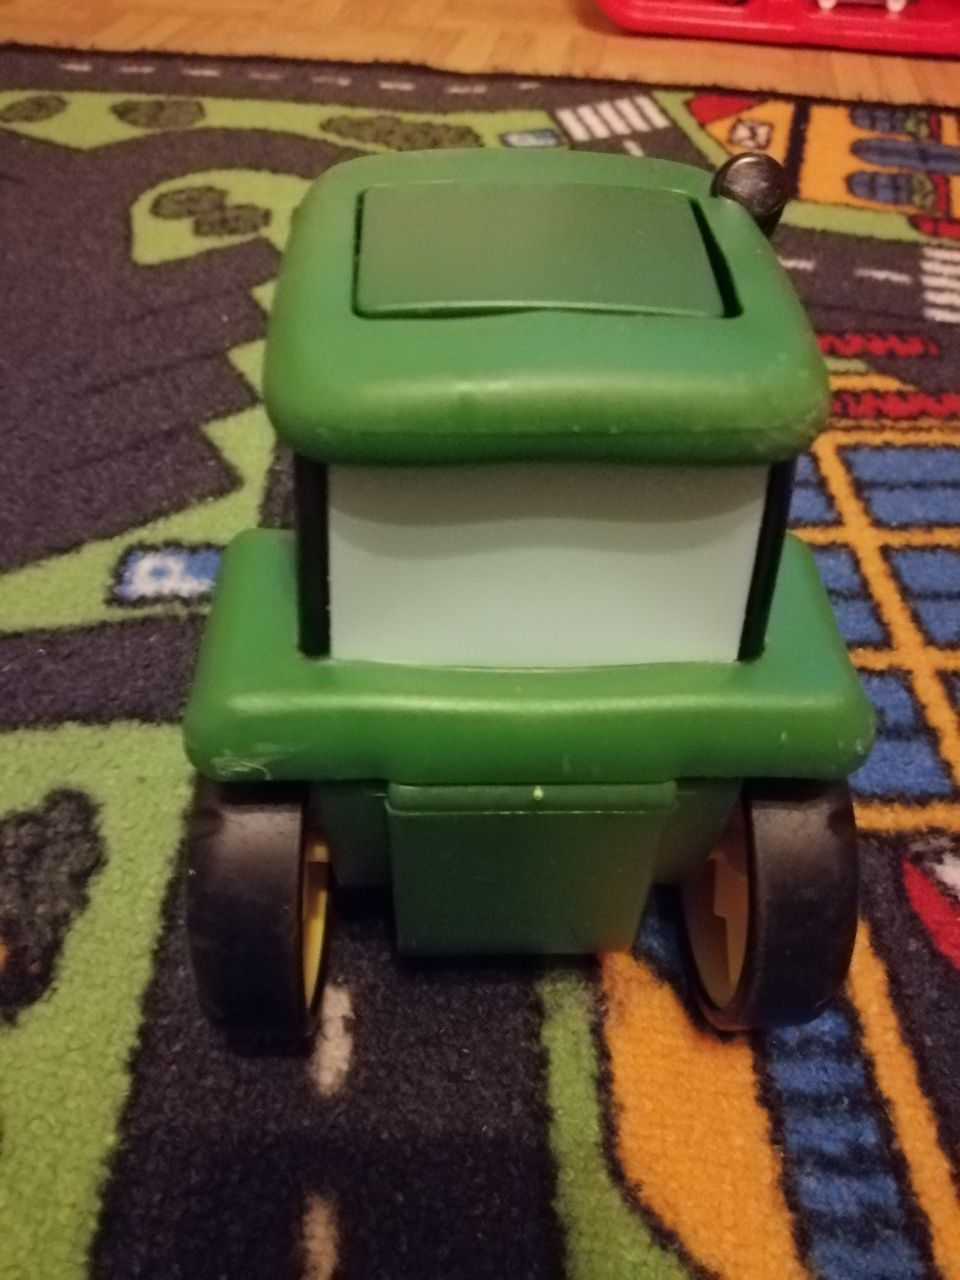 Traktor john deere zabawka